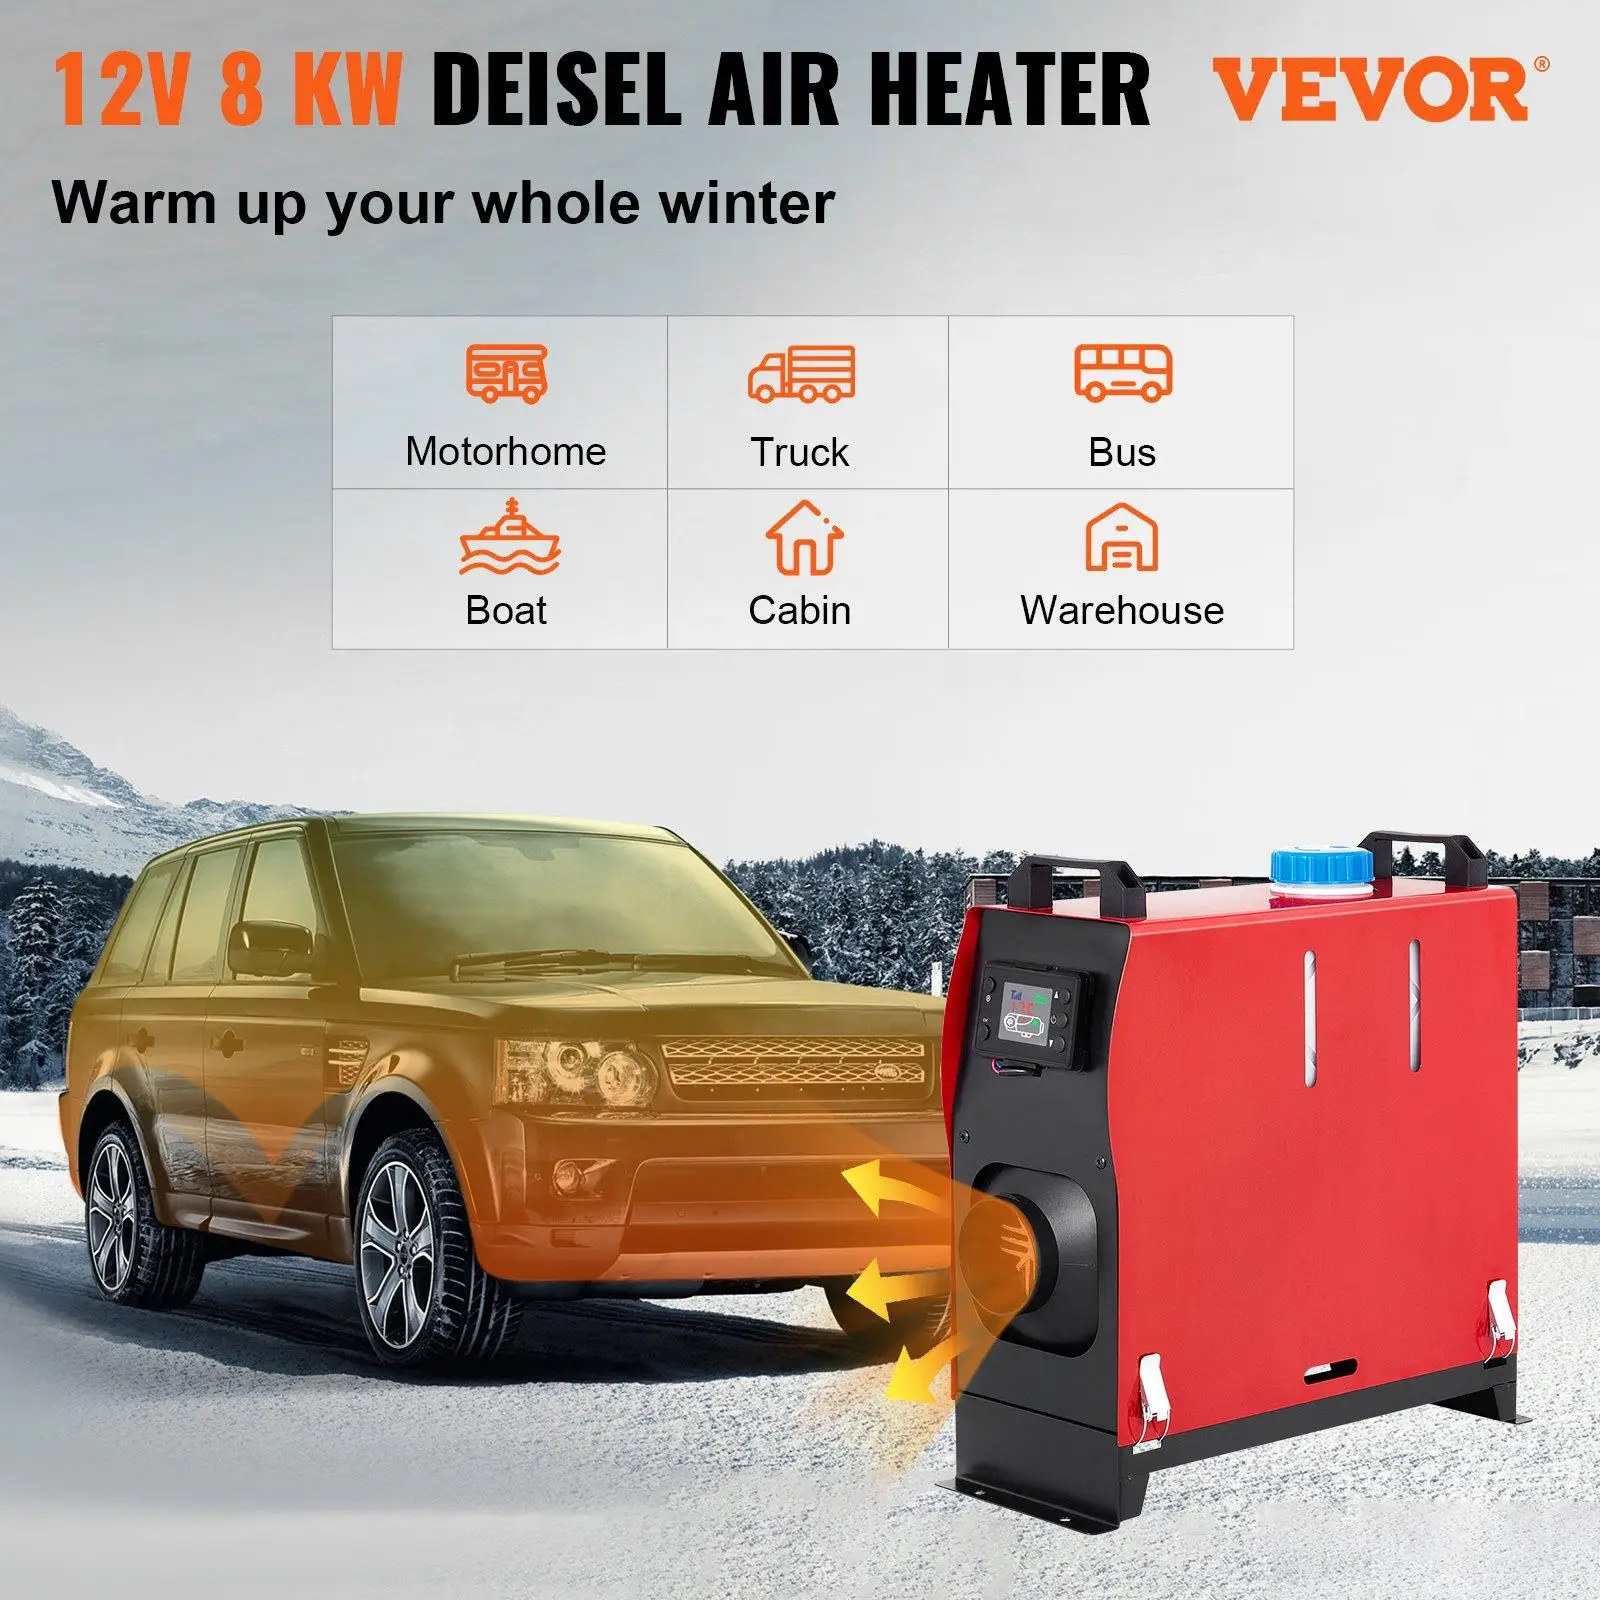 12V diesel air heater